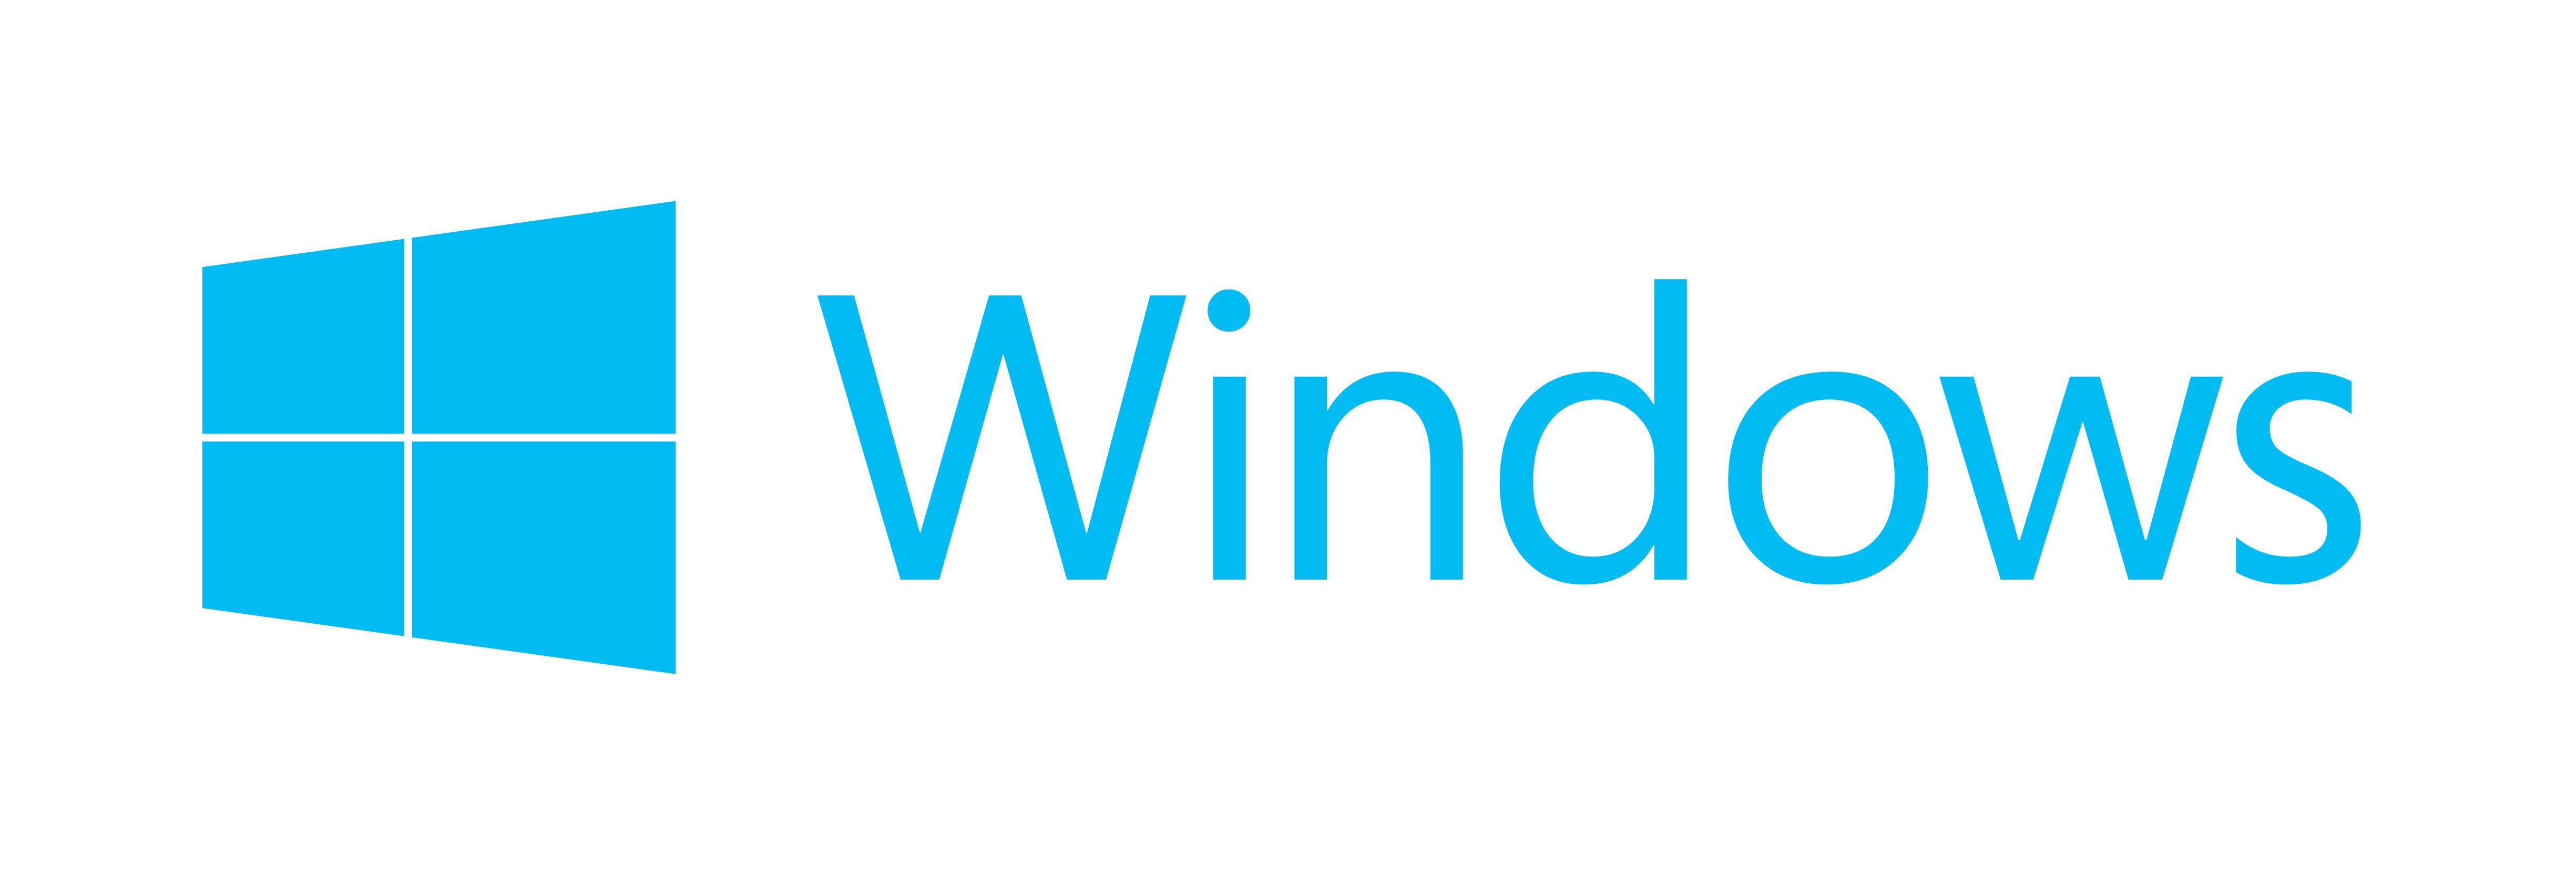 Windows Versions Logo - windows' tag wiki